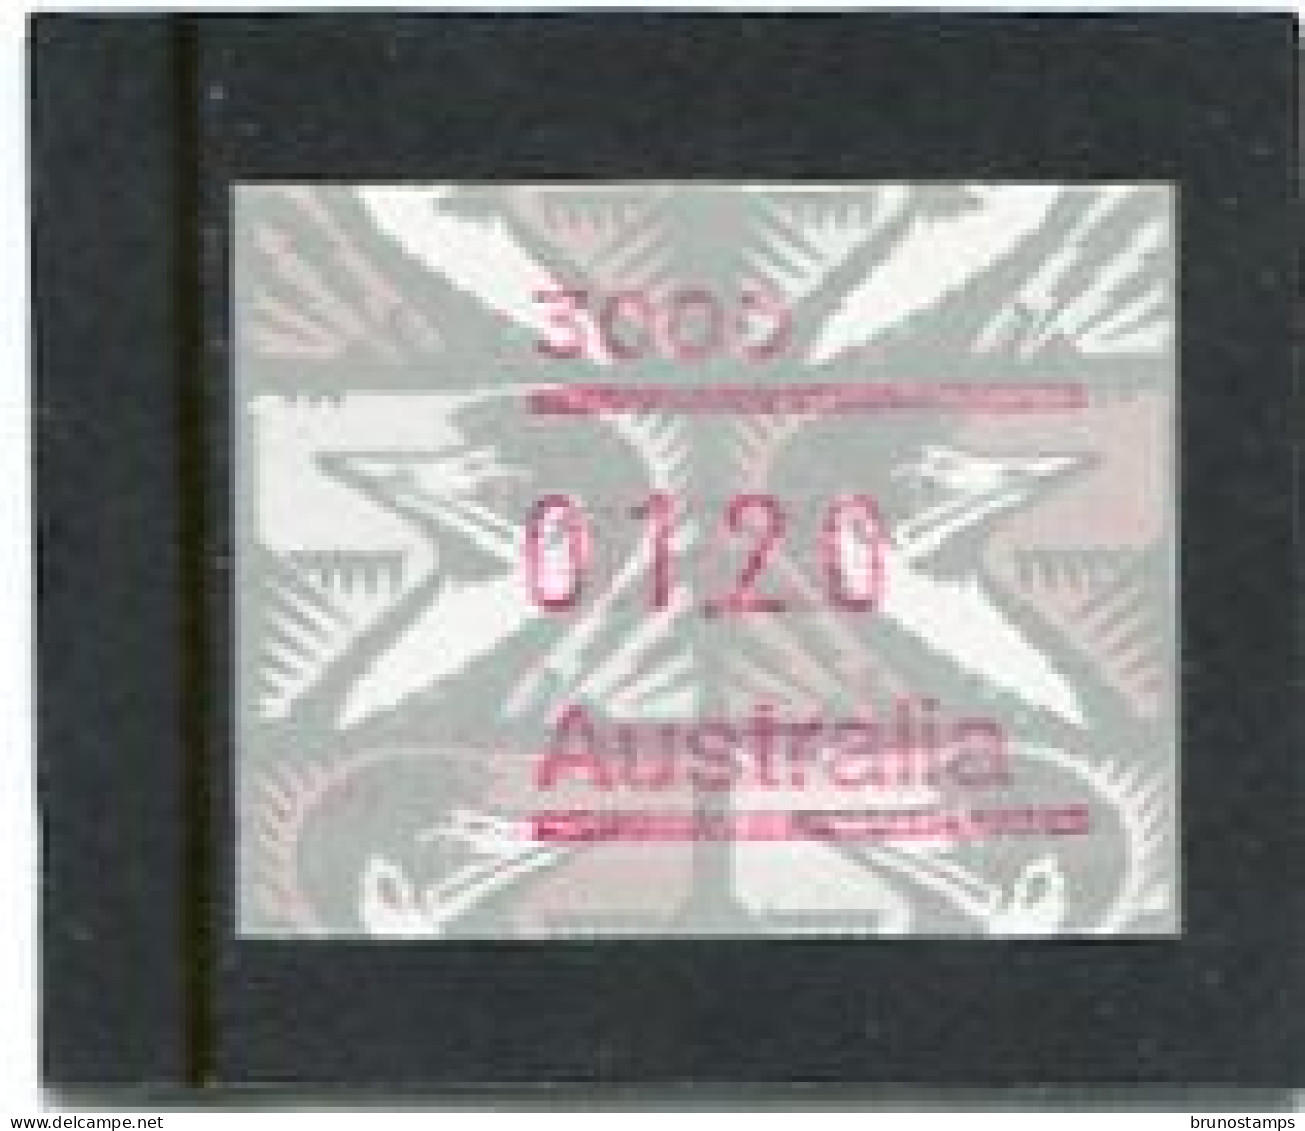 AUSTRALIA - 1992  1.20$  FRAMA  EMU  POSTCODE  3000  (MELBOURNE)  MINT NH - Automatenmarken [ATM]